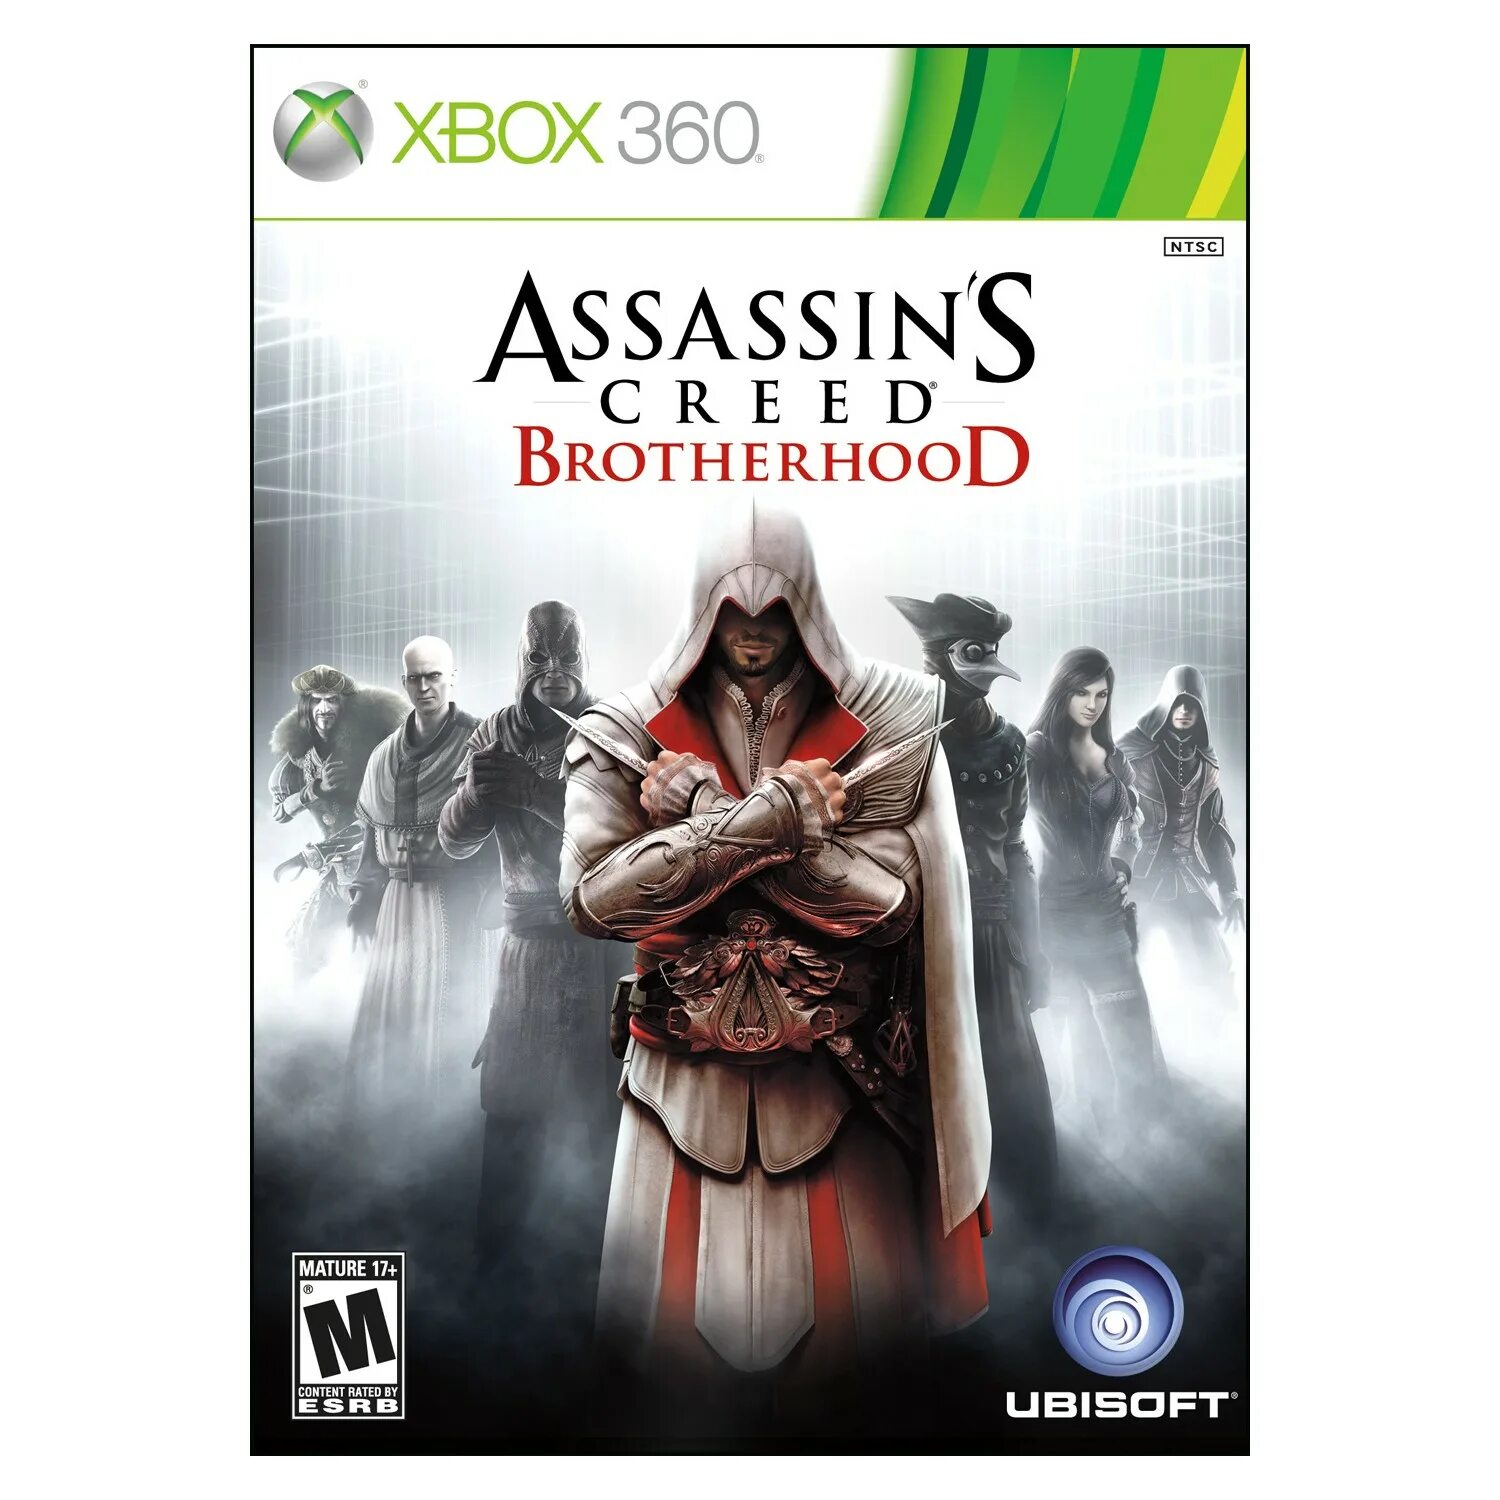 Ассасин хбокс. Assassins Creed Brotherhood диск ПС 3. Assassin`s Creed: братство крови (Brotherhood) [ps3, русская версия]. Assassins Creed Brotherhood Xbox 360 обложка. Assassin's Creed 2 на ps3 диск.